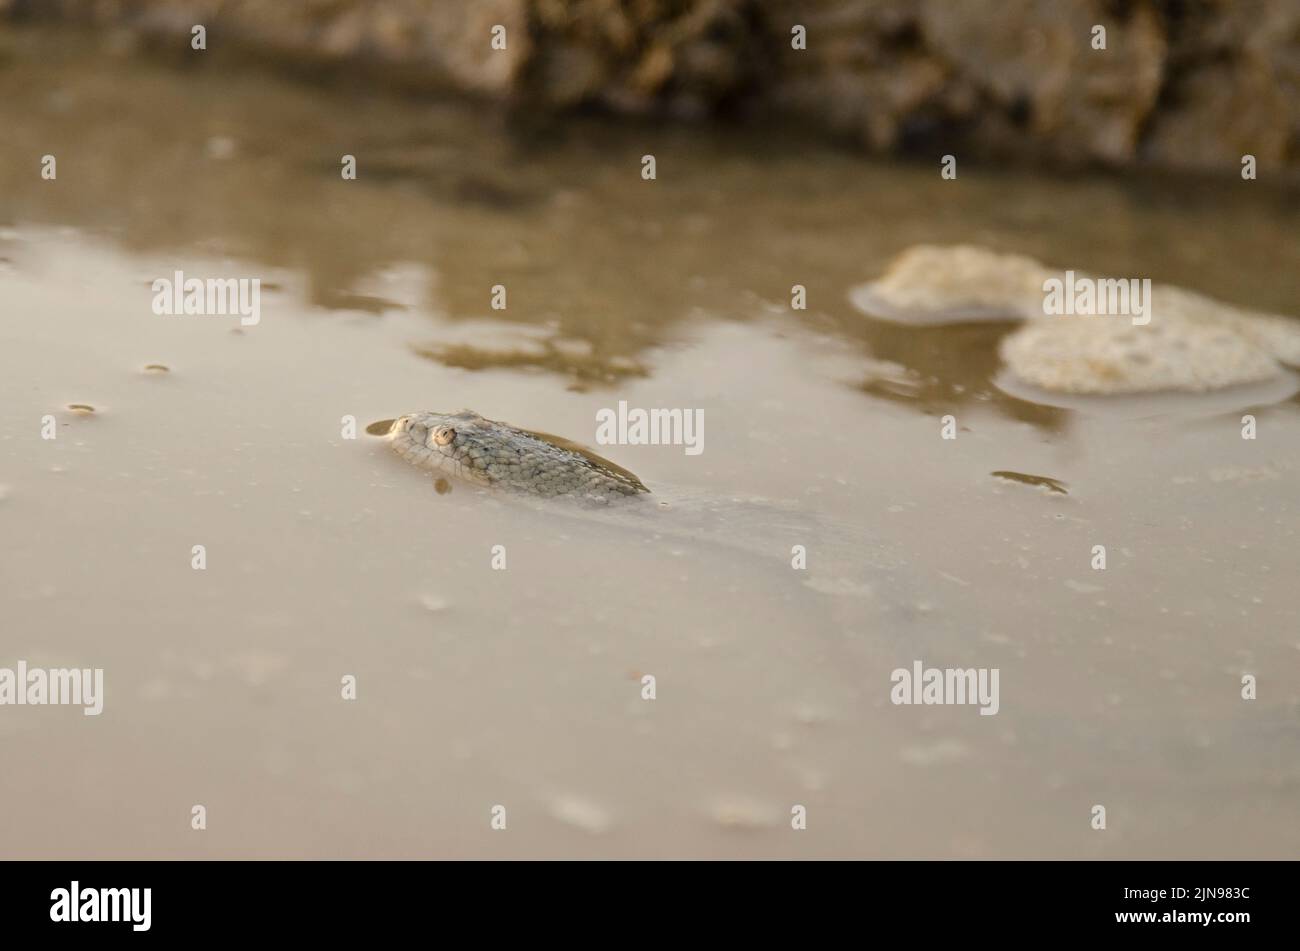 A closeup of a dice snake in a muddy puddle. Natrix tessellata. Stock Photo